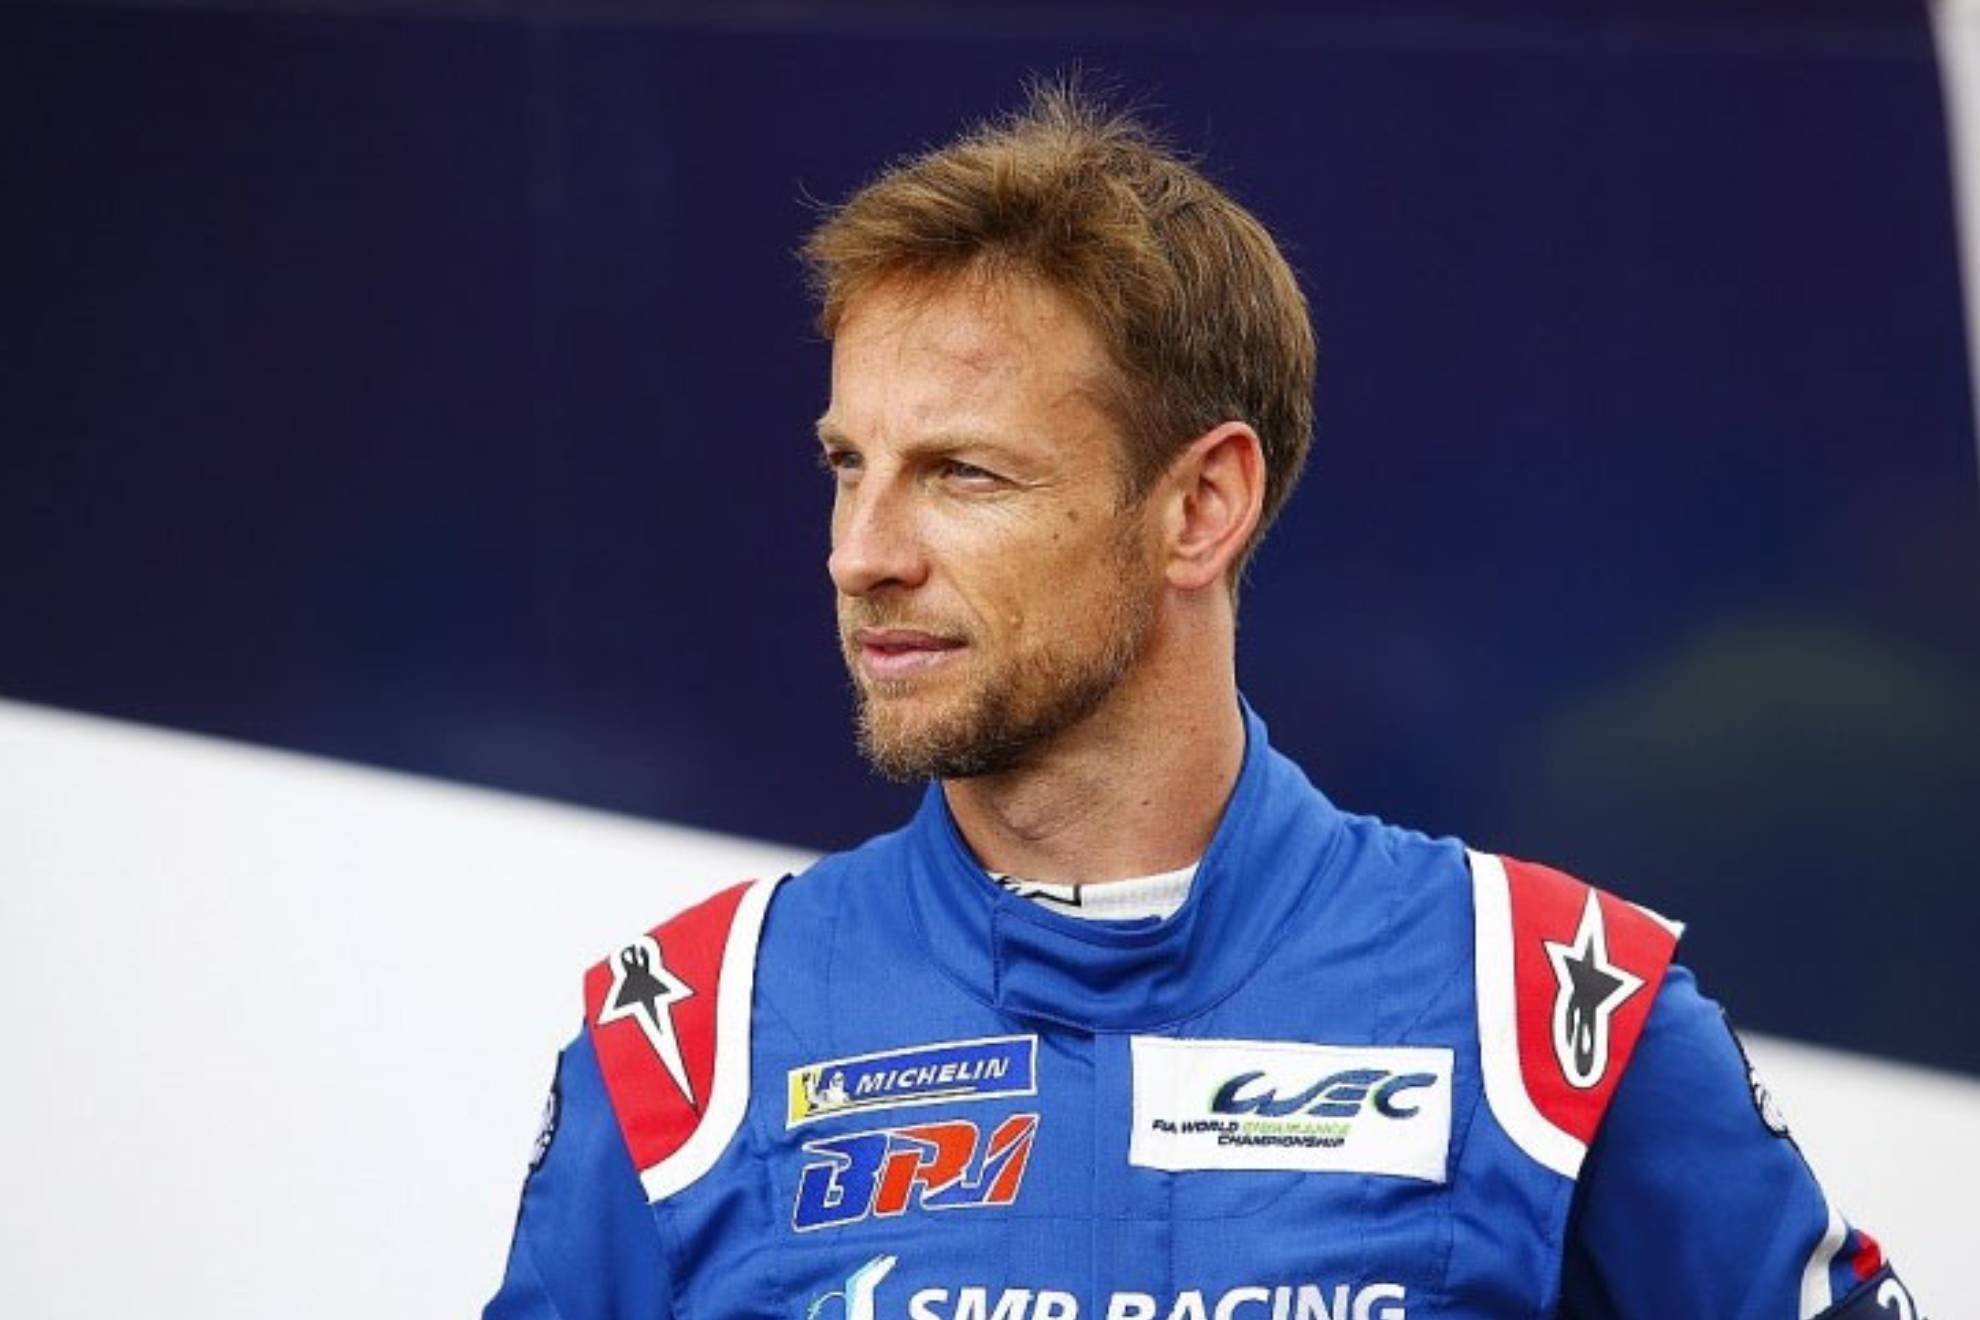 Jenso Button, estuvo en la categor�a de LMP2 en 2019.